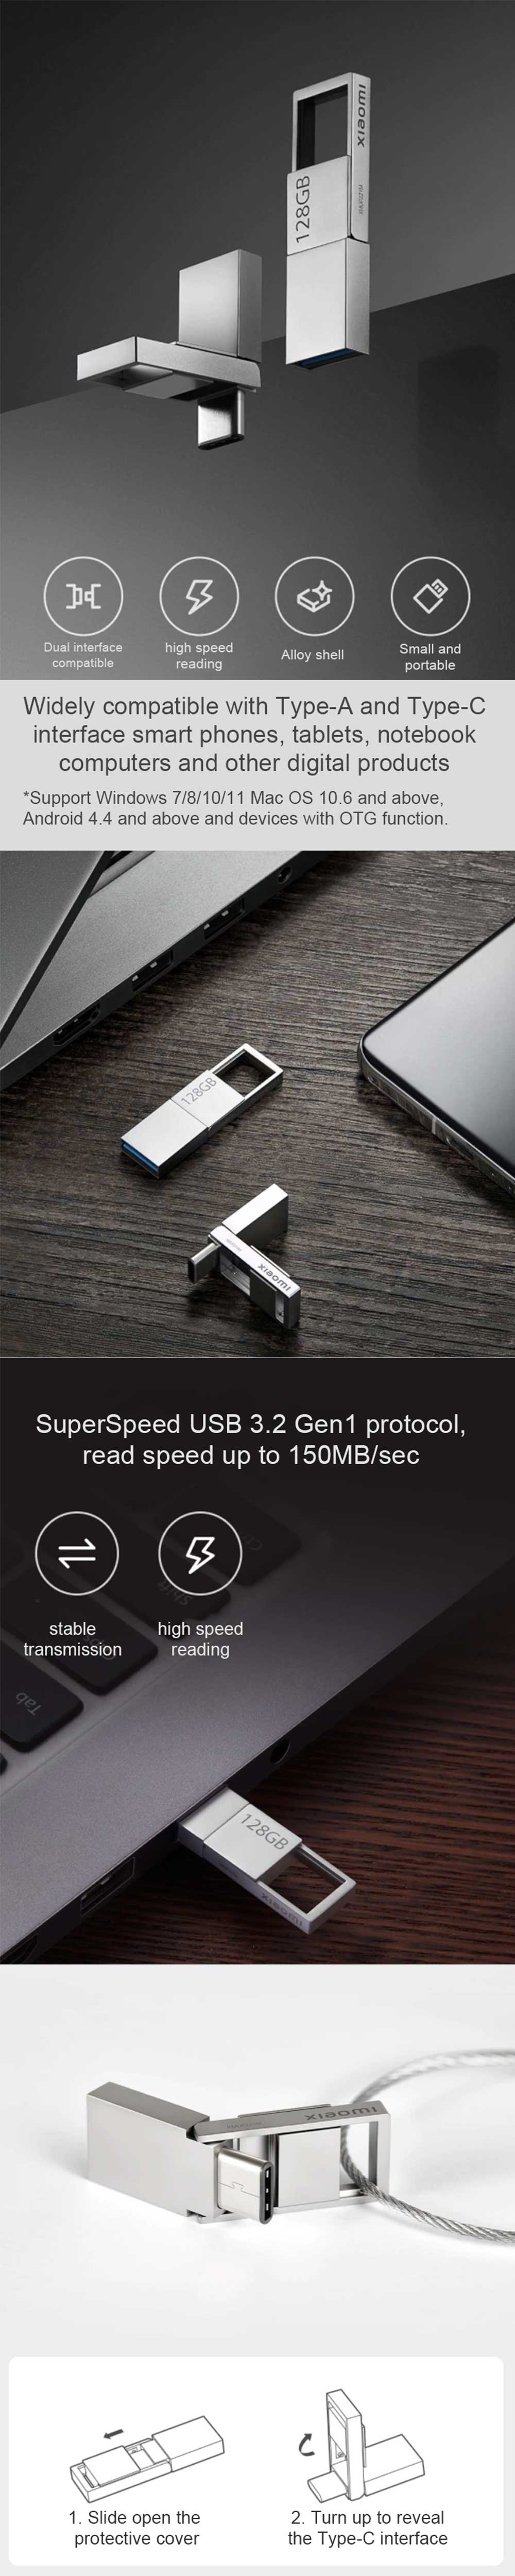 Xiaomi Dual Interface USB 3.2 Type C Flash Drive 6